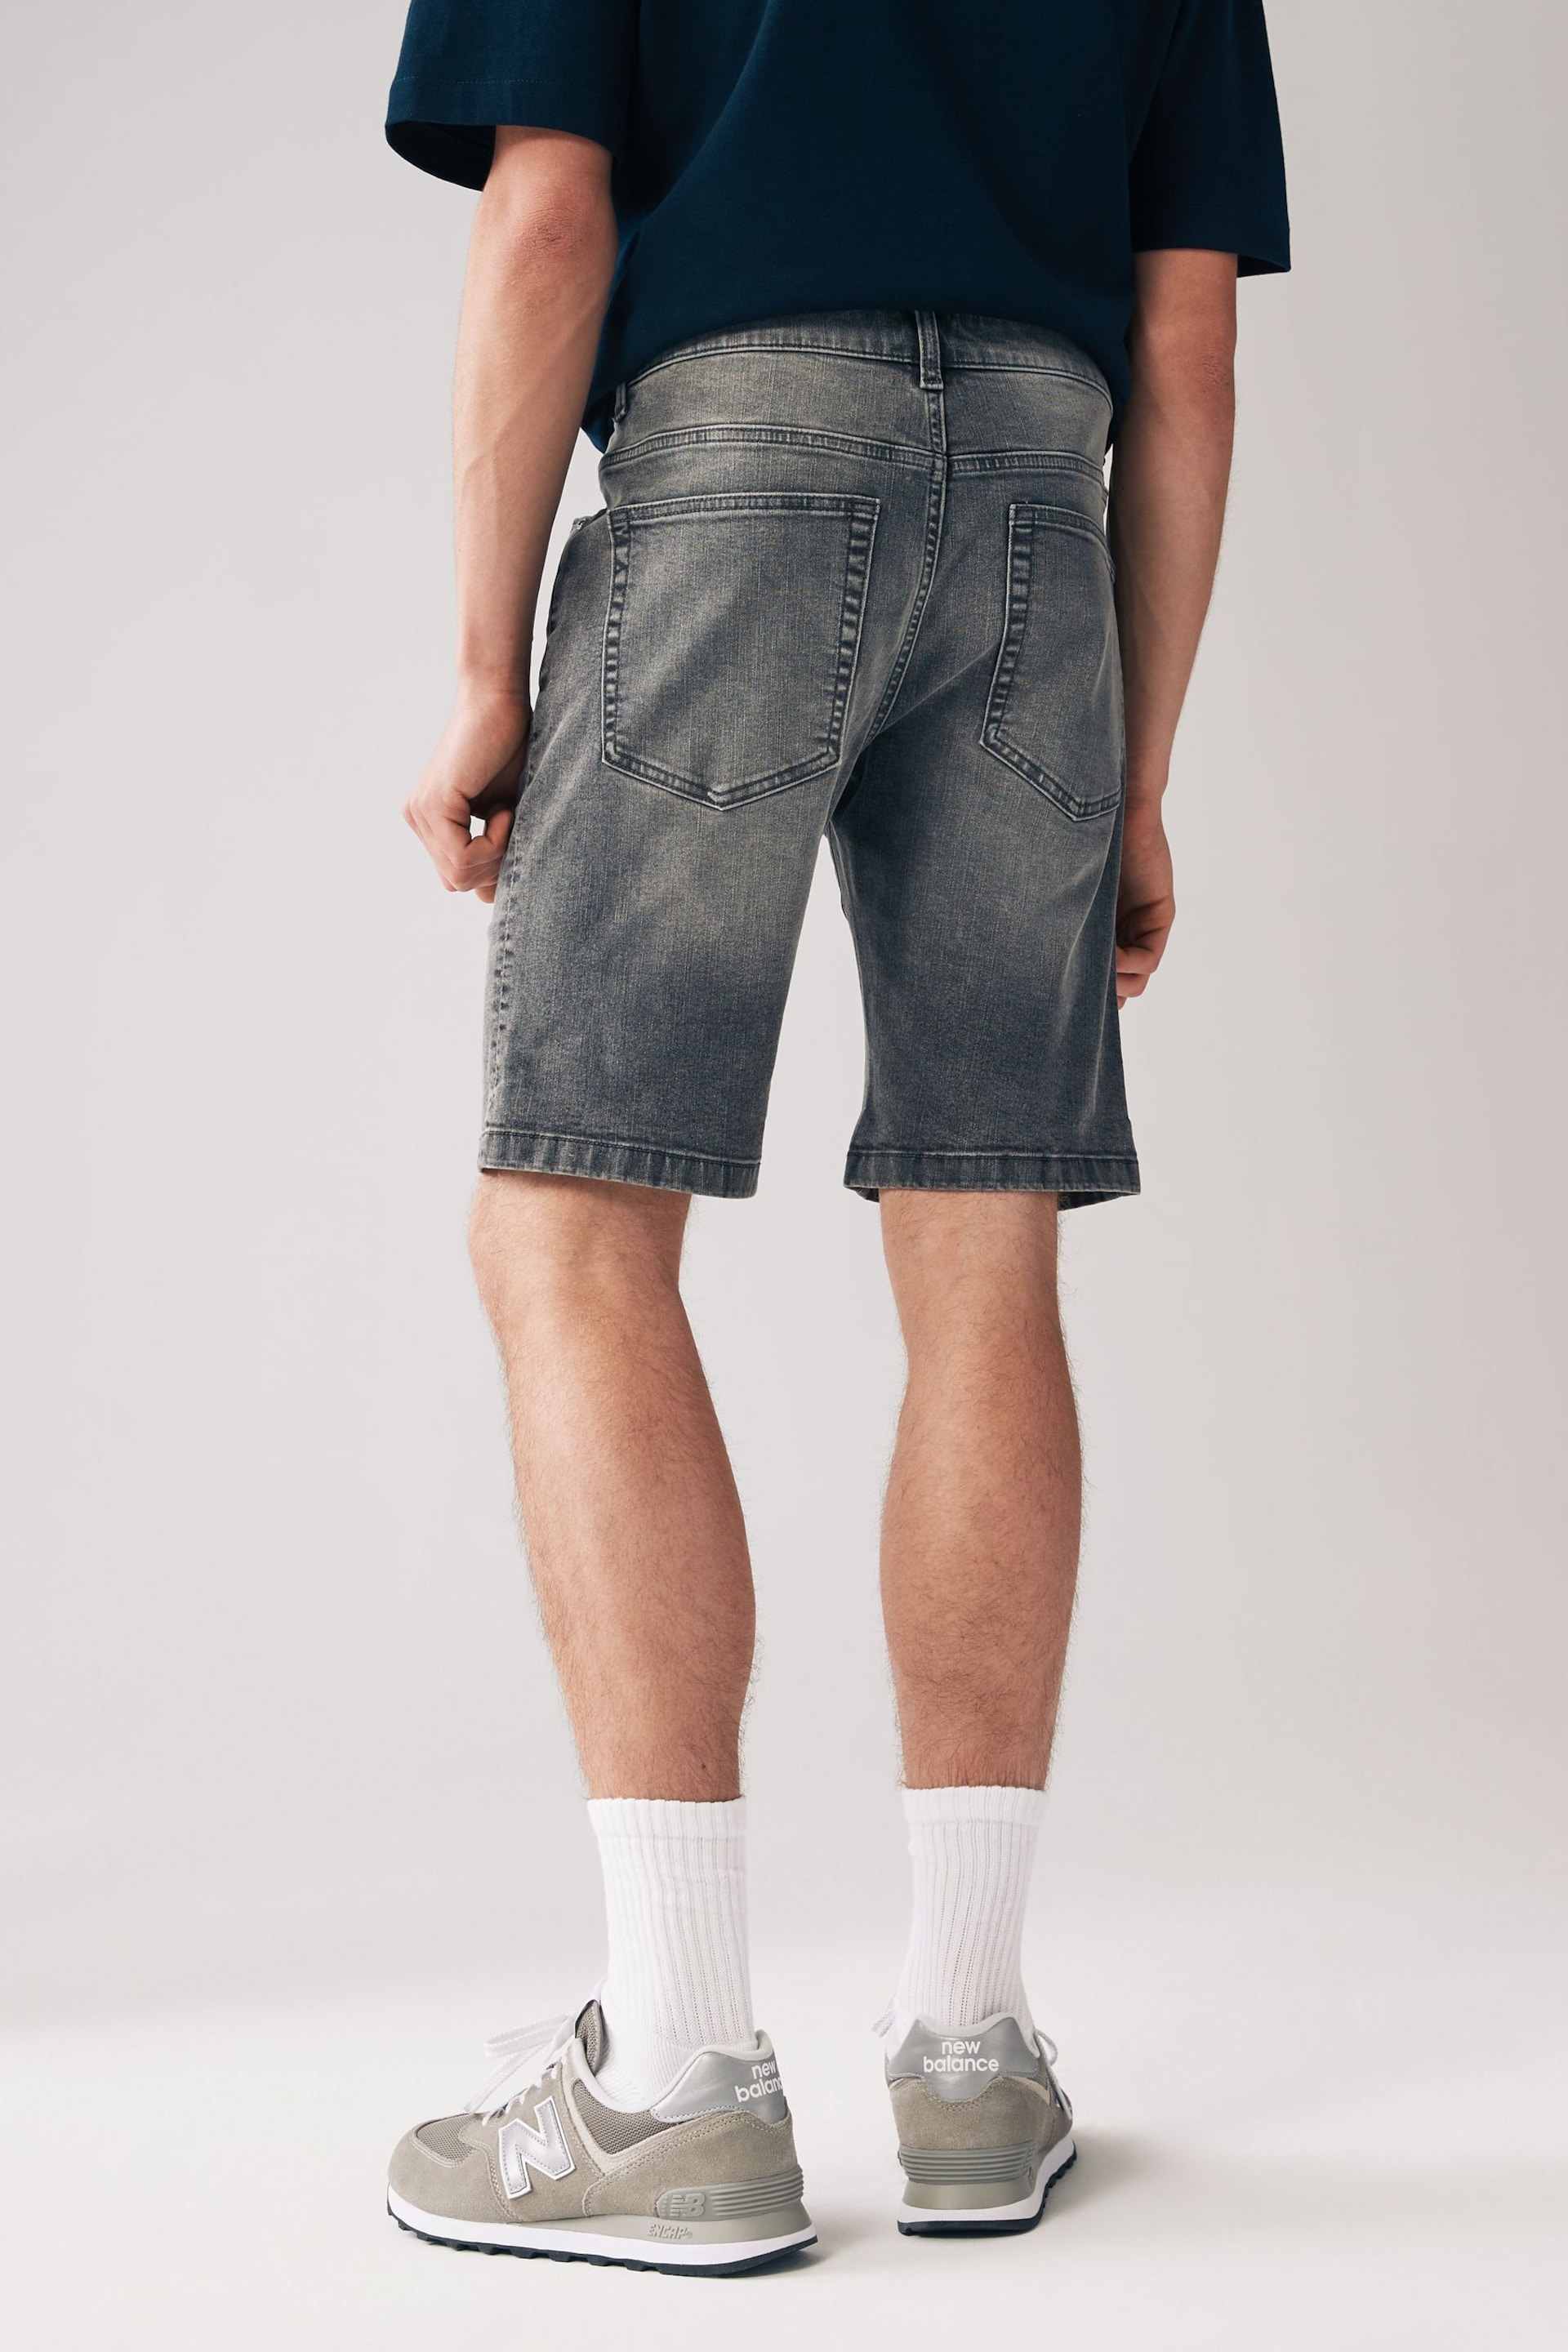 Grey Skinny Fit Stretch Denim Shorts - Image 3 of 8